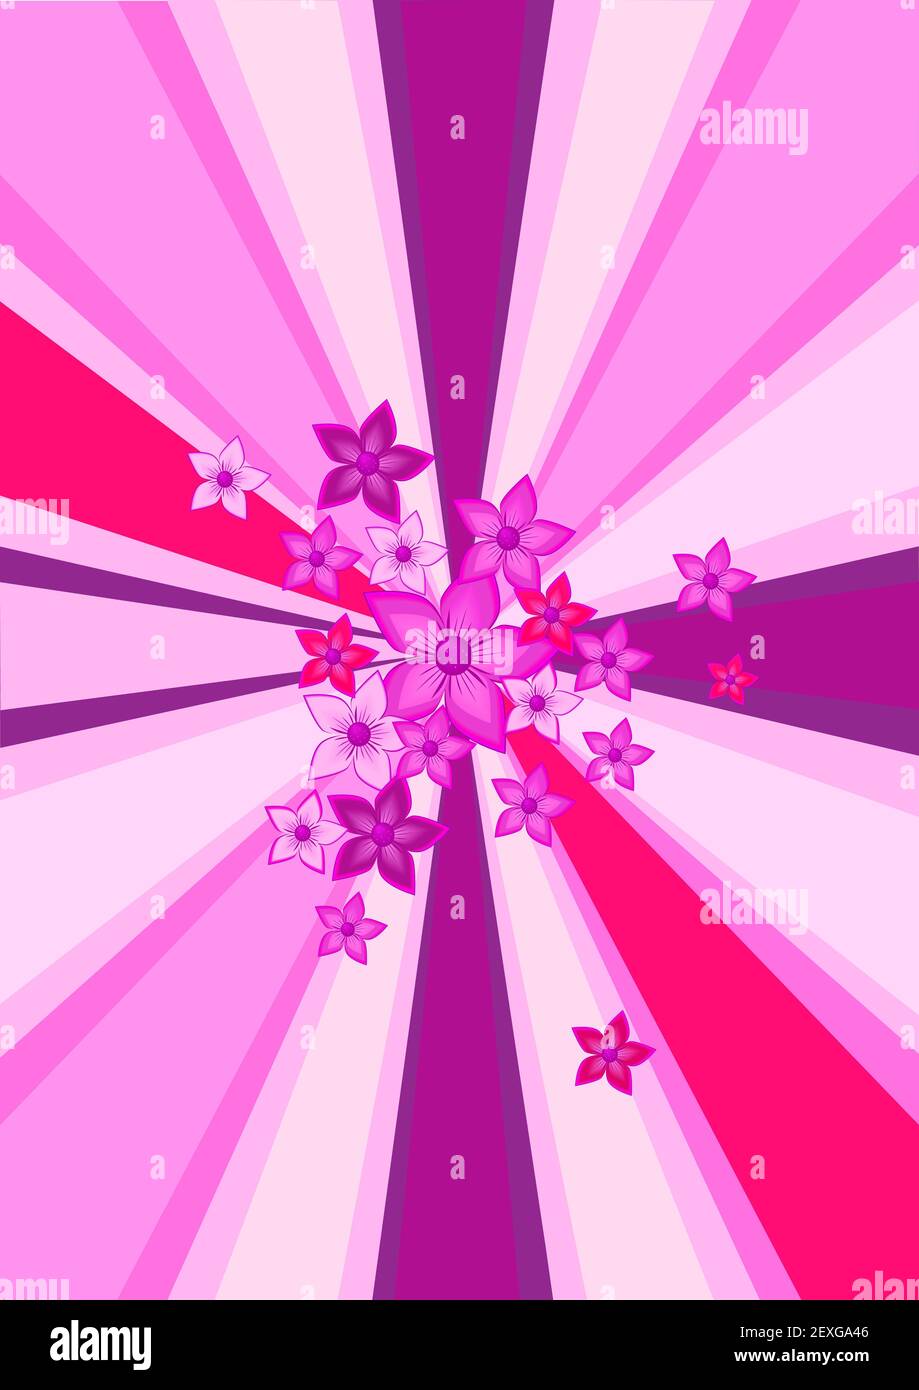 Imagen digital de un papel tapiz con flores rosadas Foto de stock